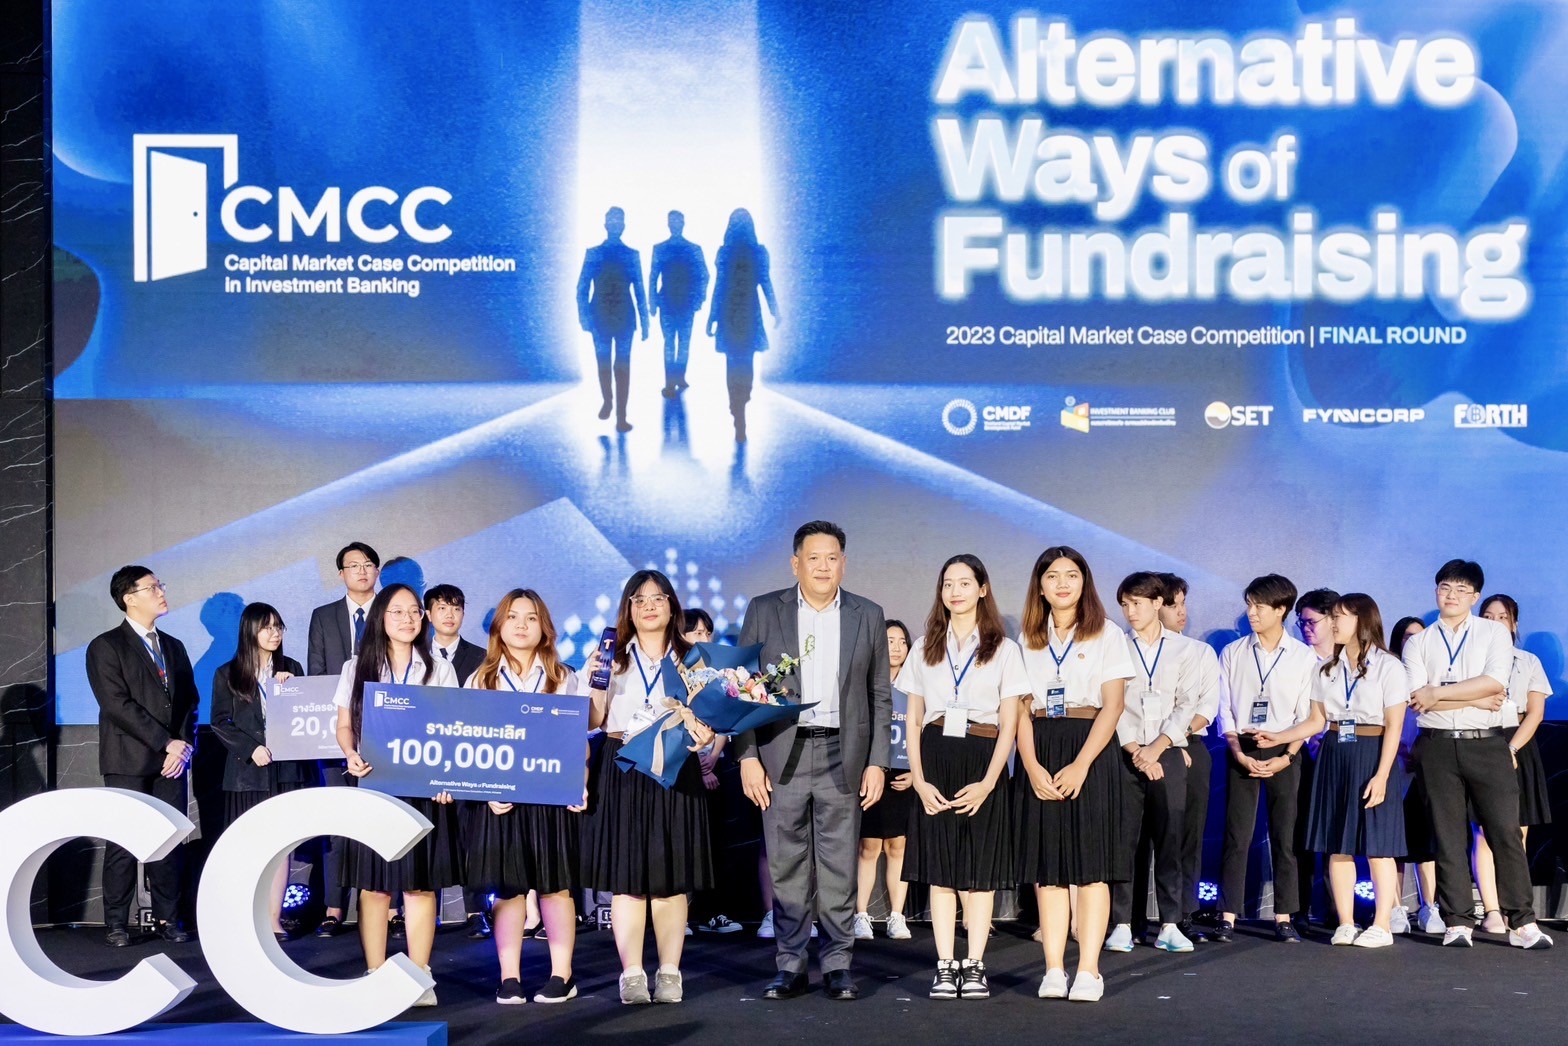 CMCC 2023 ประกาศทีมผู้ชนะเลิศการแข่งขันด้านวาณิชธนกิจในตลาดทุนครั้งแรกในไทย